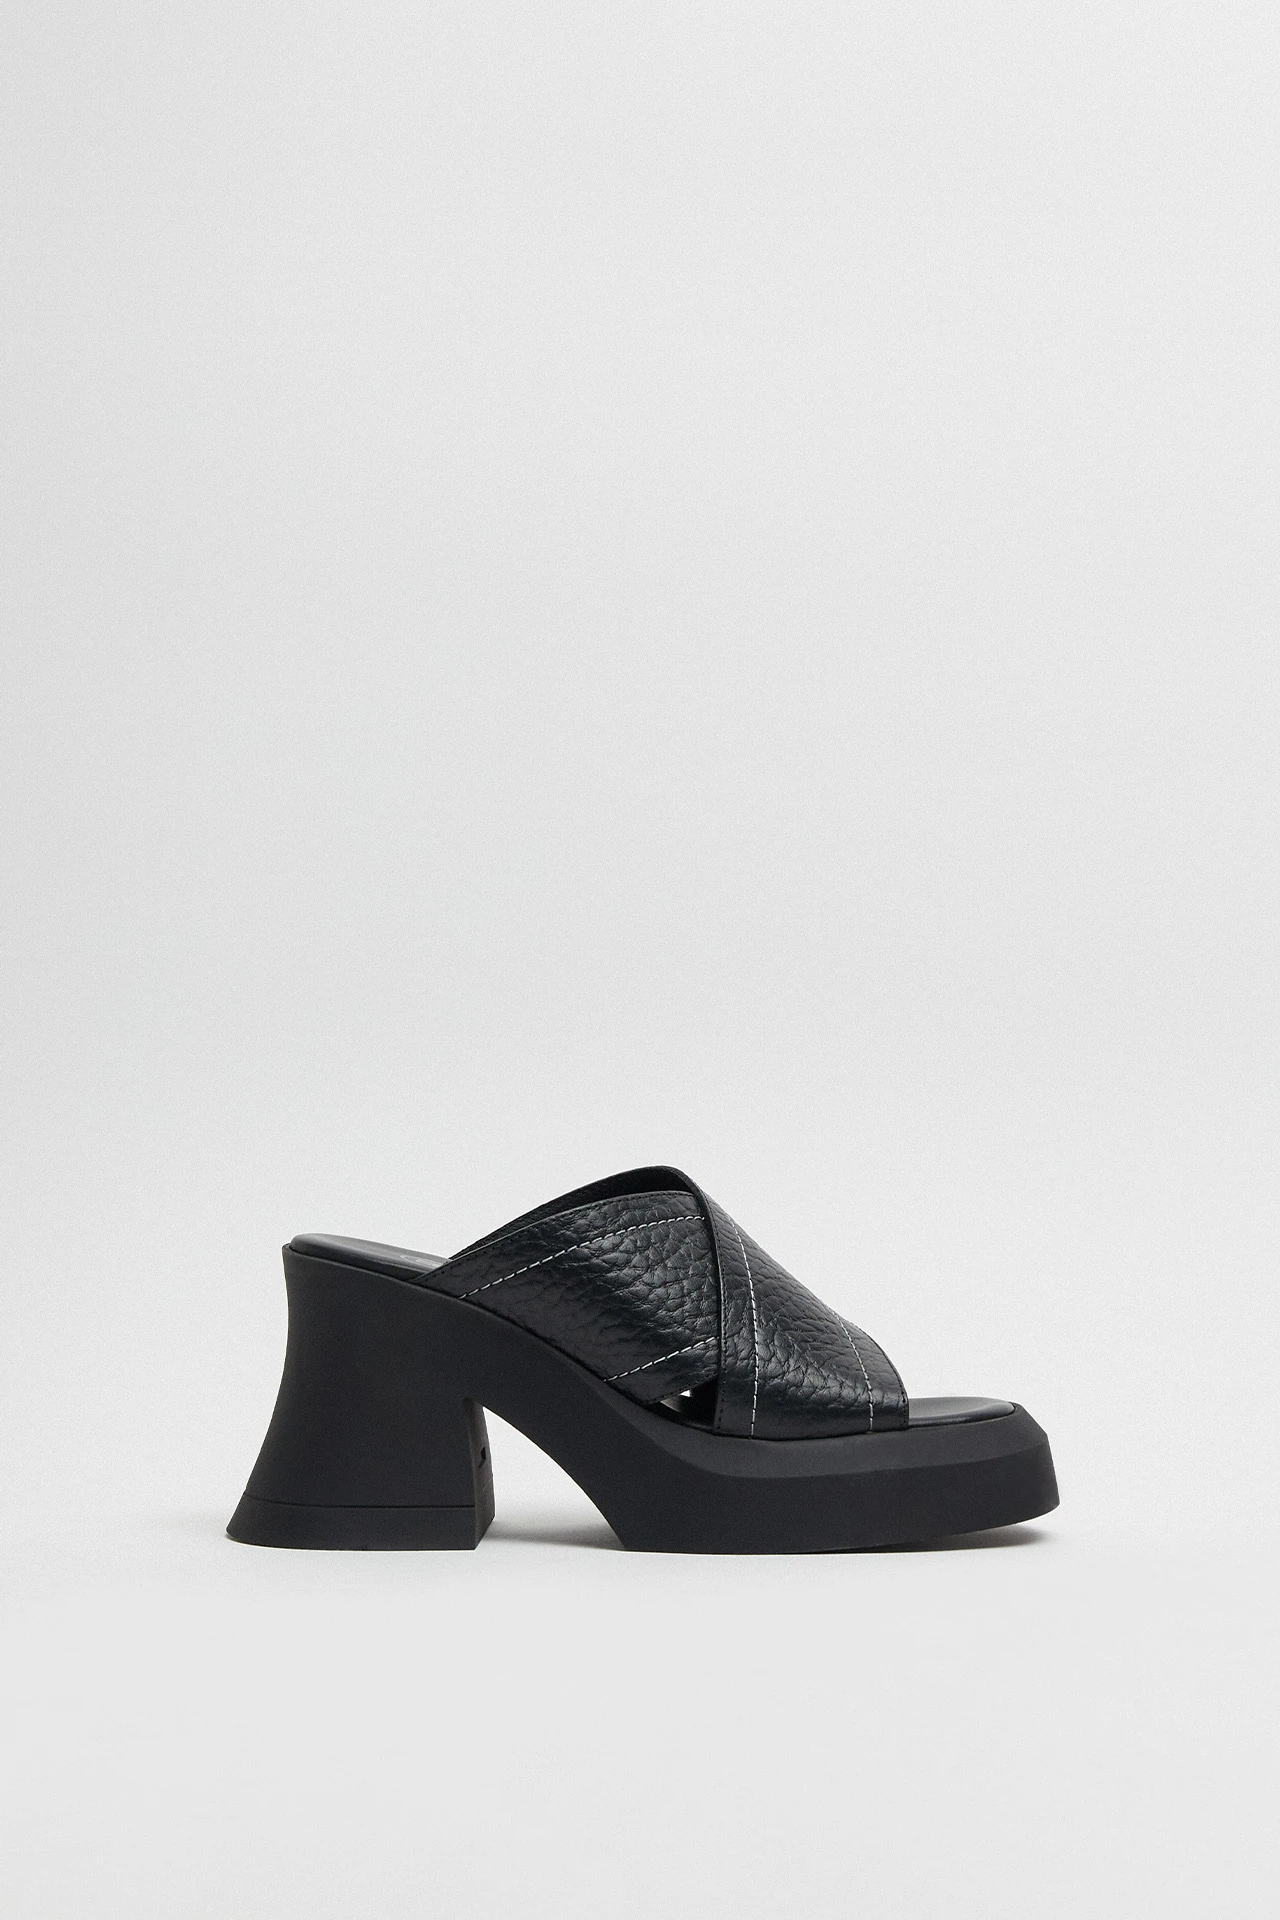 E8-raissa-black-mule-sandal-01